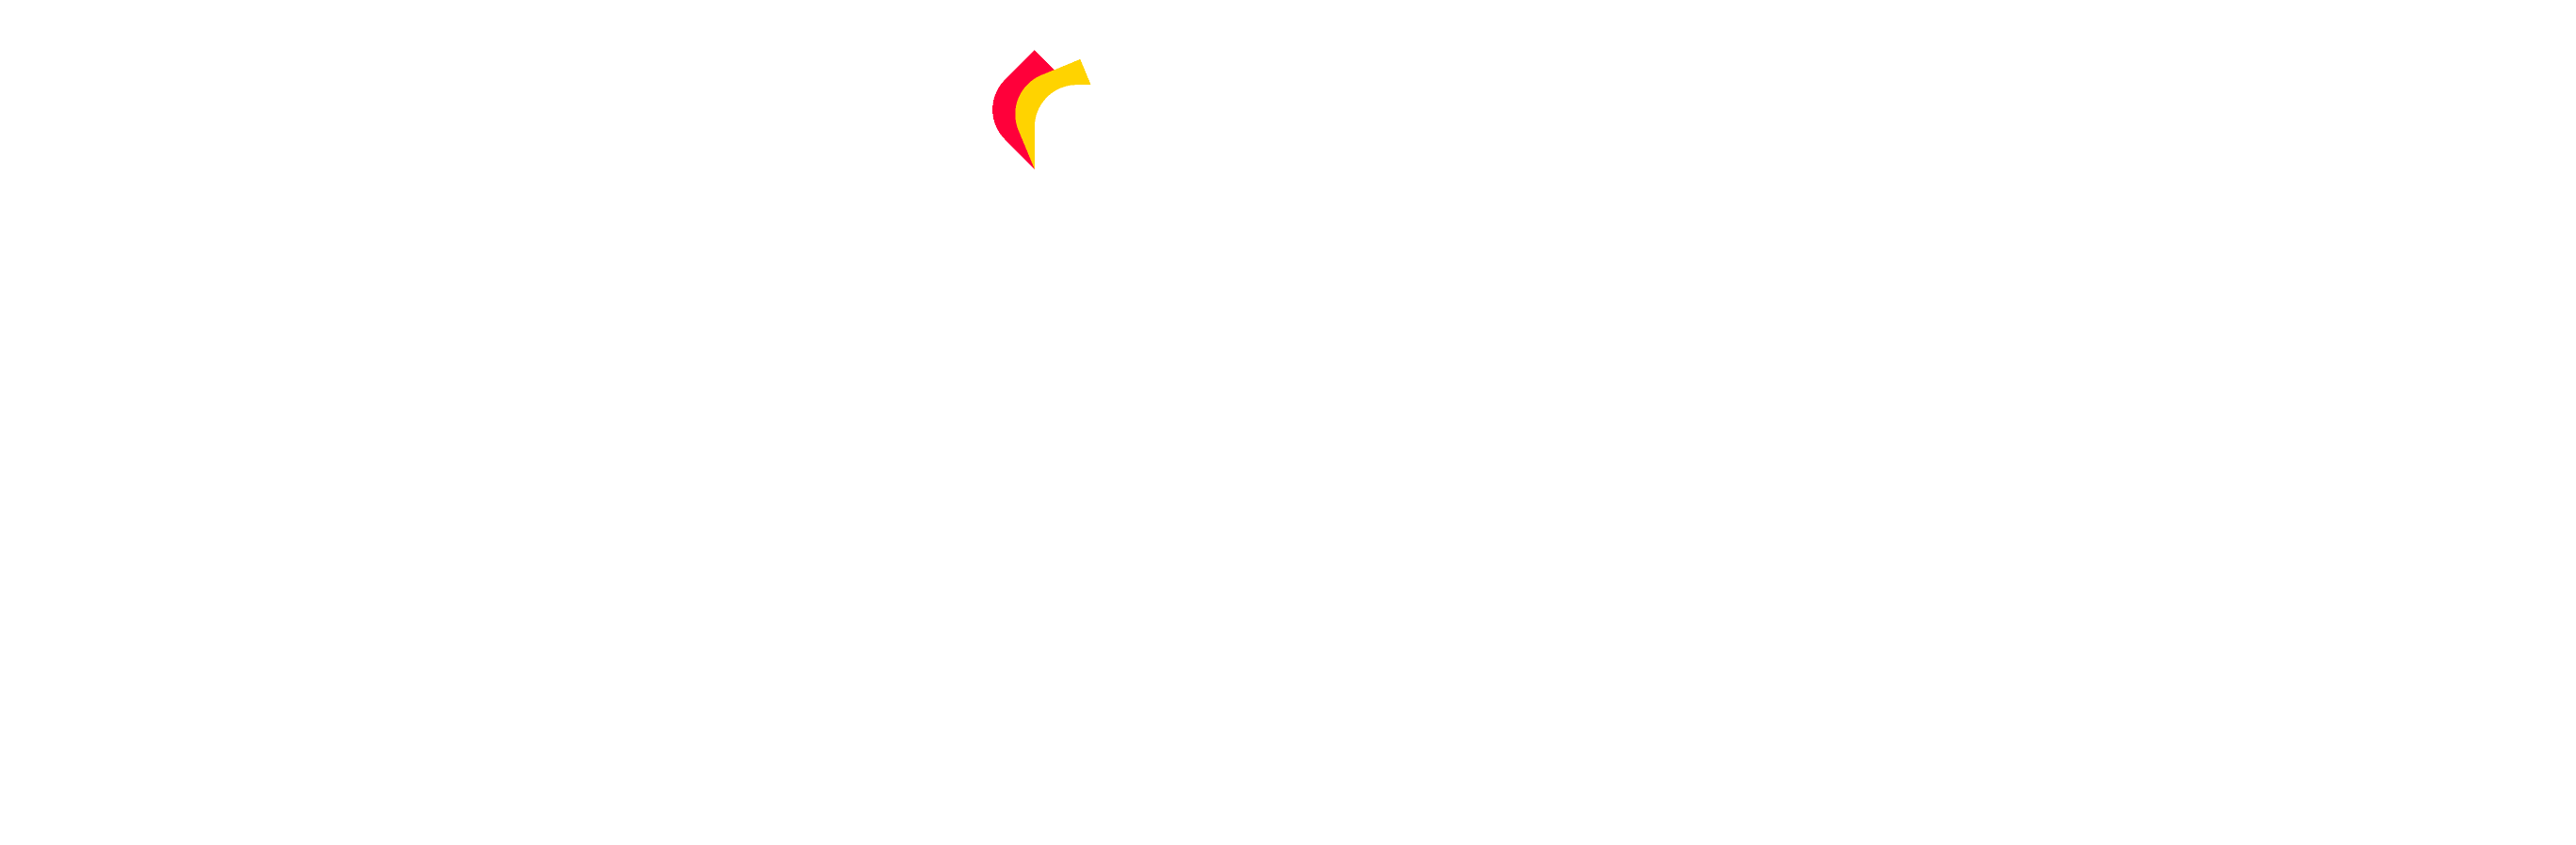 Ortingo logo